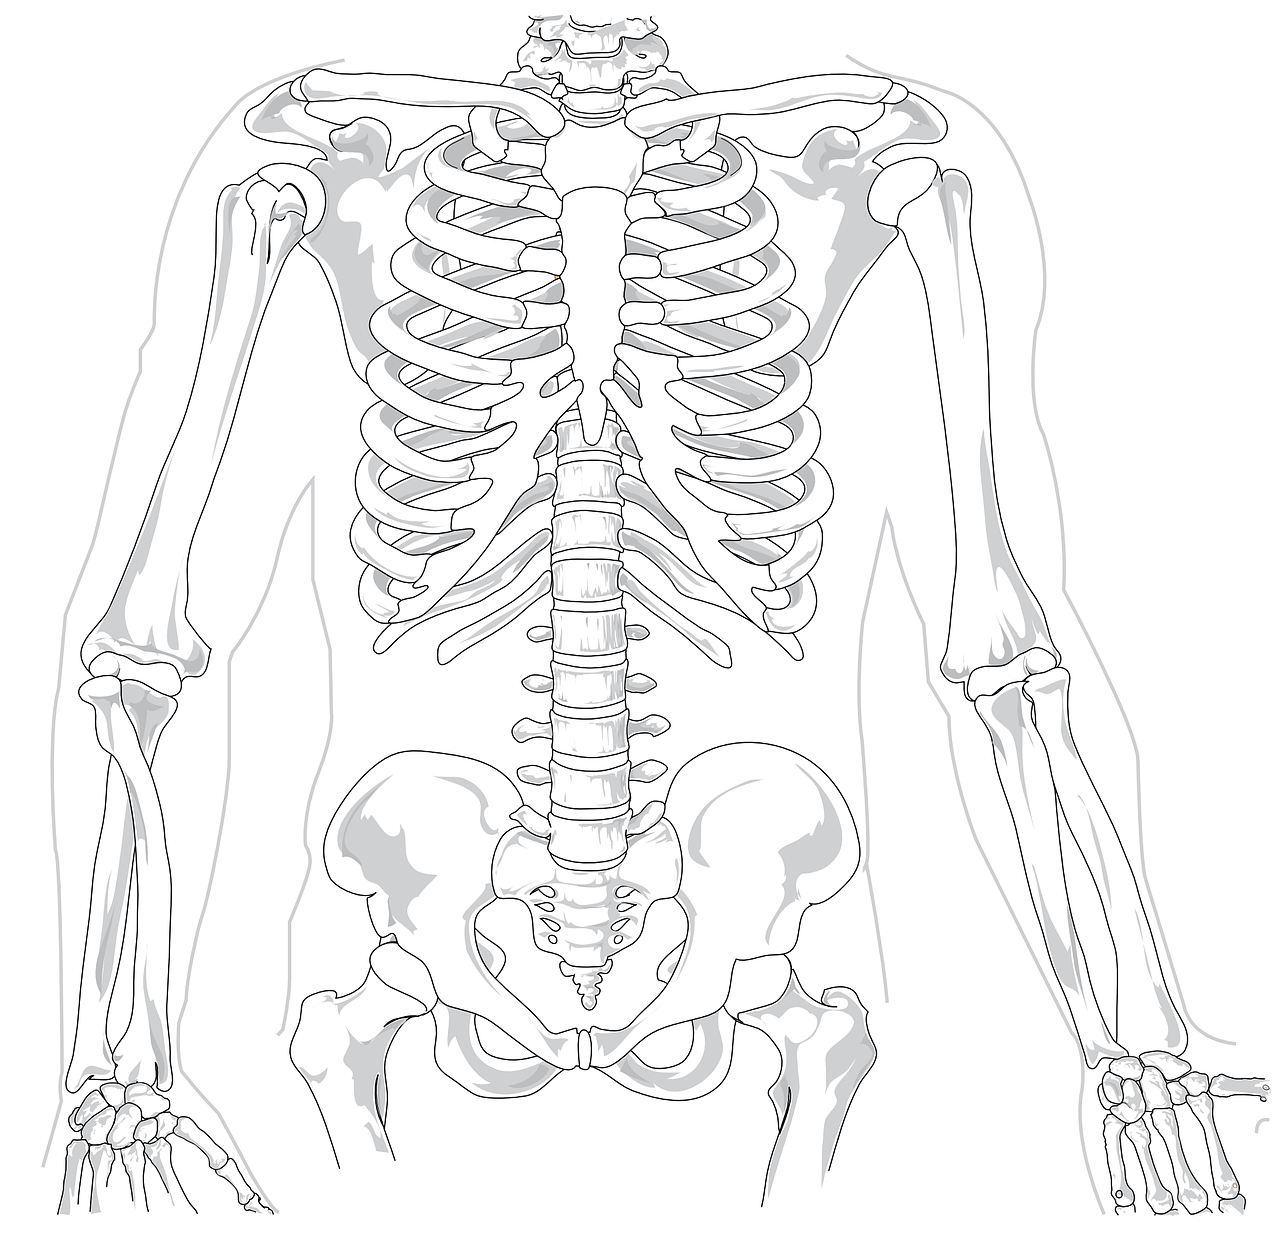 a drawing of a human skeleton, an illustration of, shutterstock, detailed upper body, thick vector line art, endoekeleton exposure, backbone